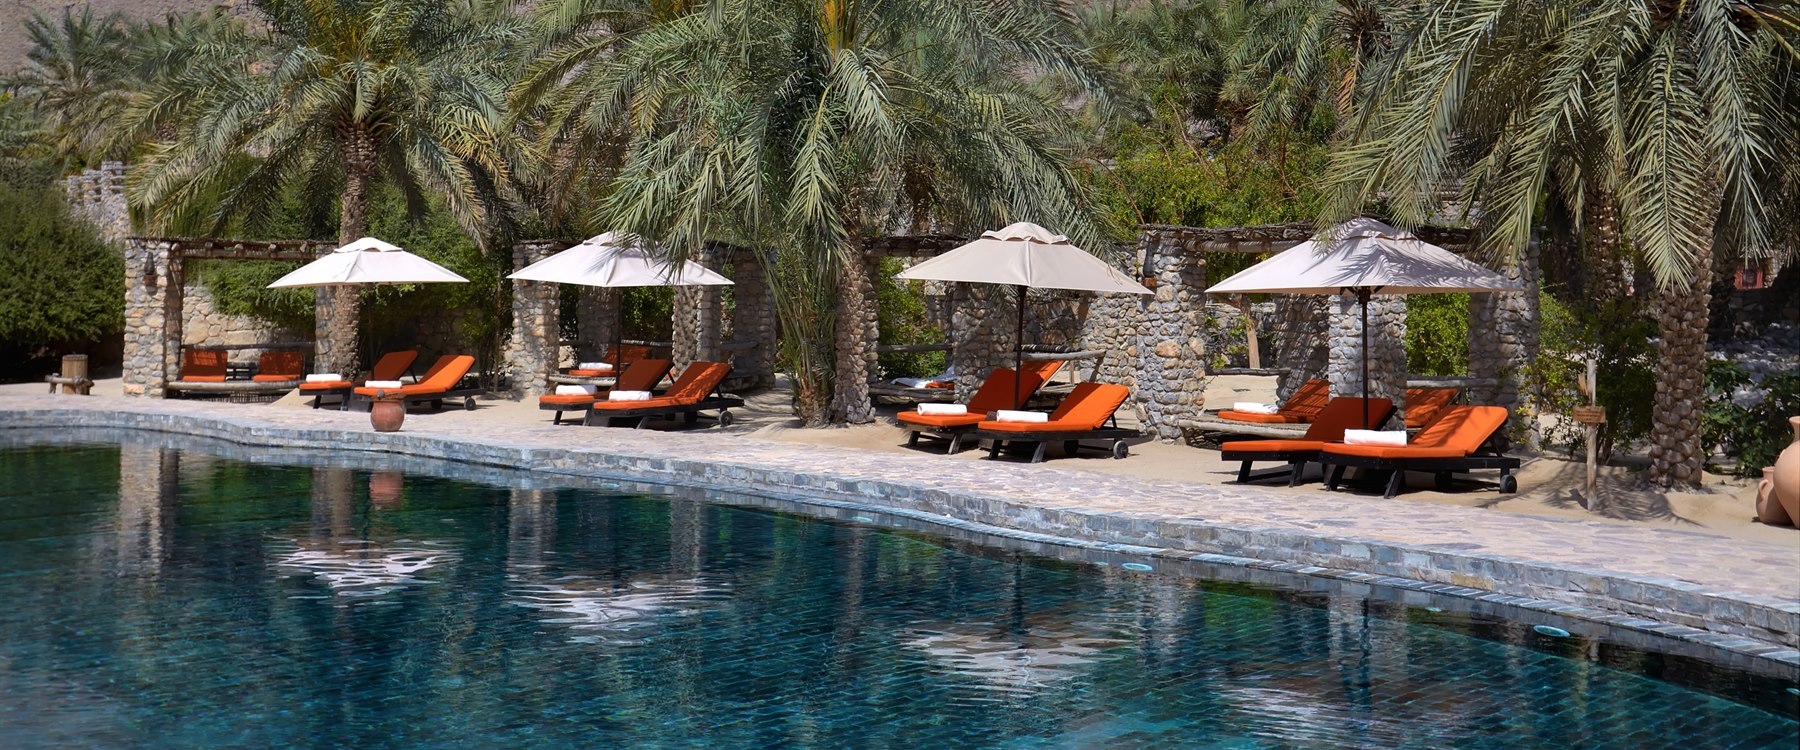 Sun loungers at Six Senses Zighy Bay, Oman